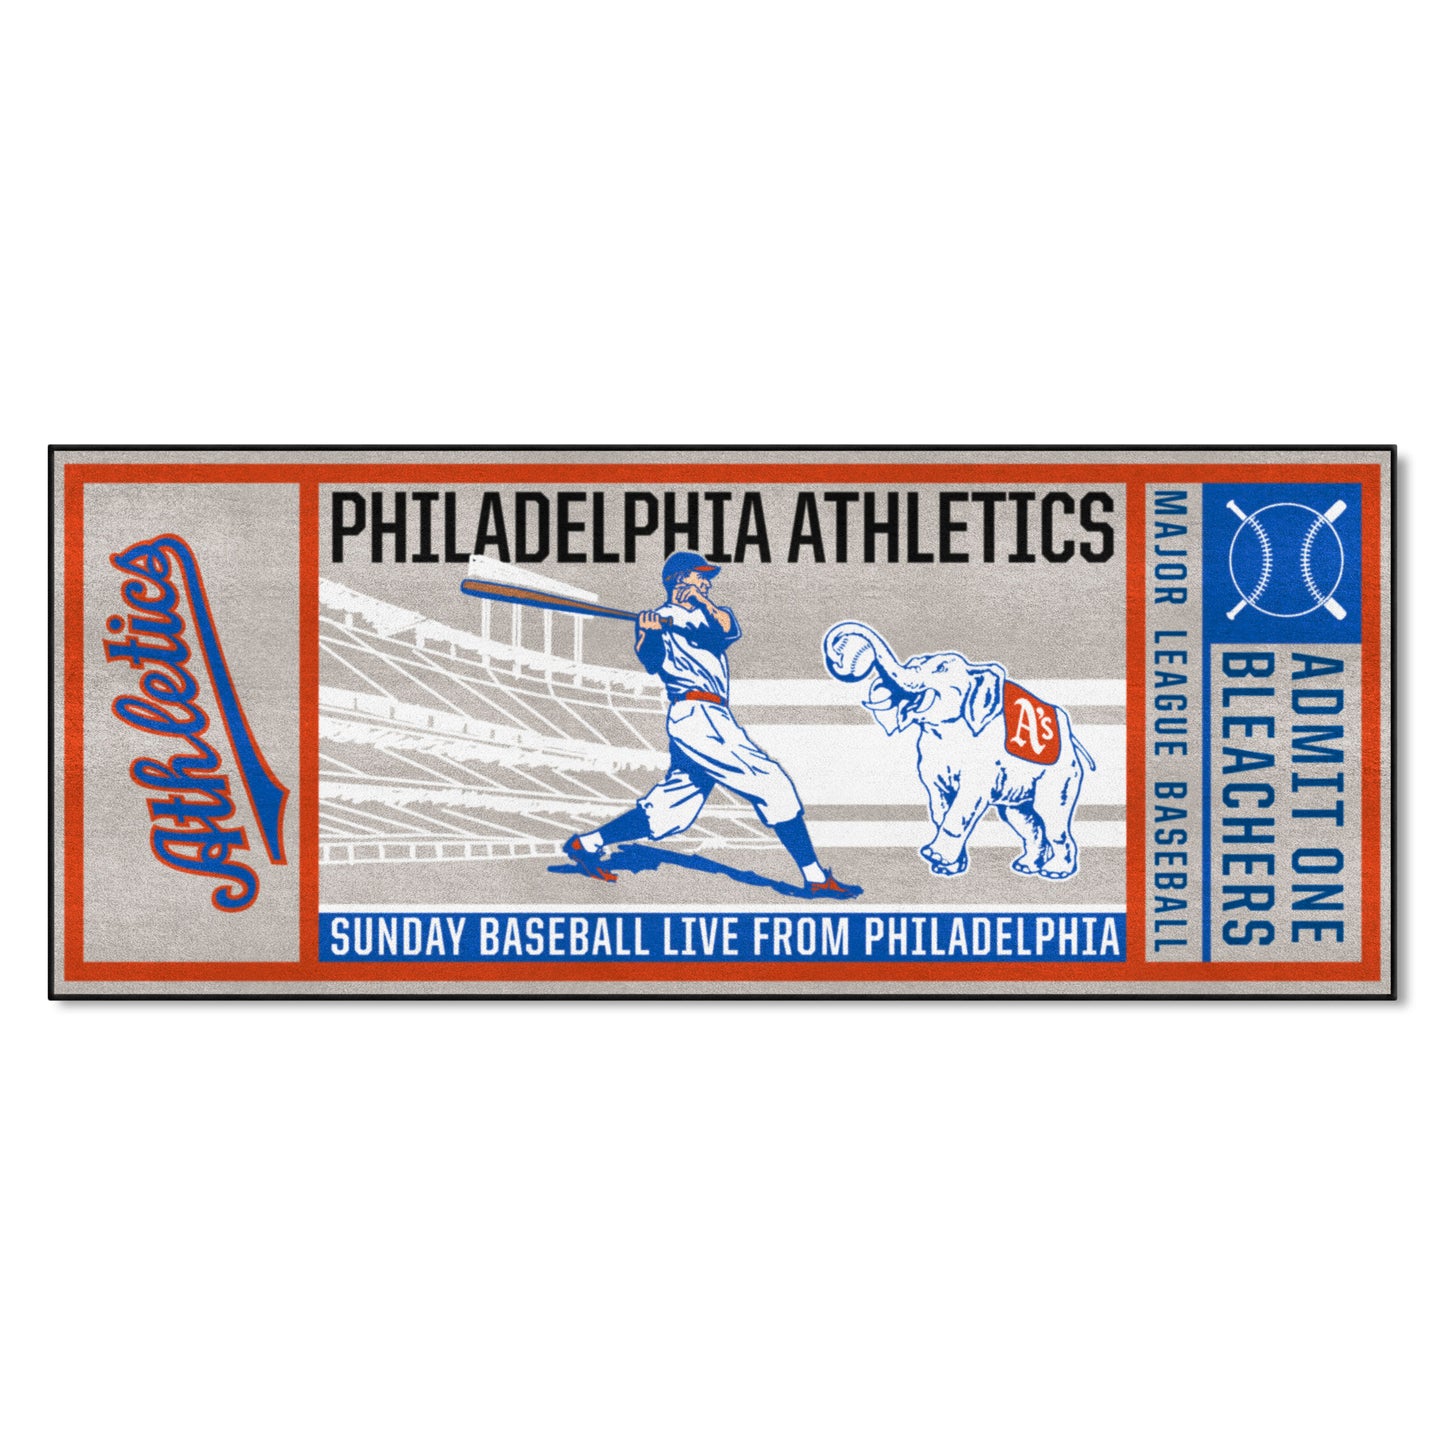 Philadelphia Athletics Ticket Runner Rug - 30in. x 72in. - Retro Collection, 1954 Philadelphia A's